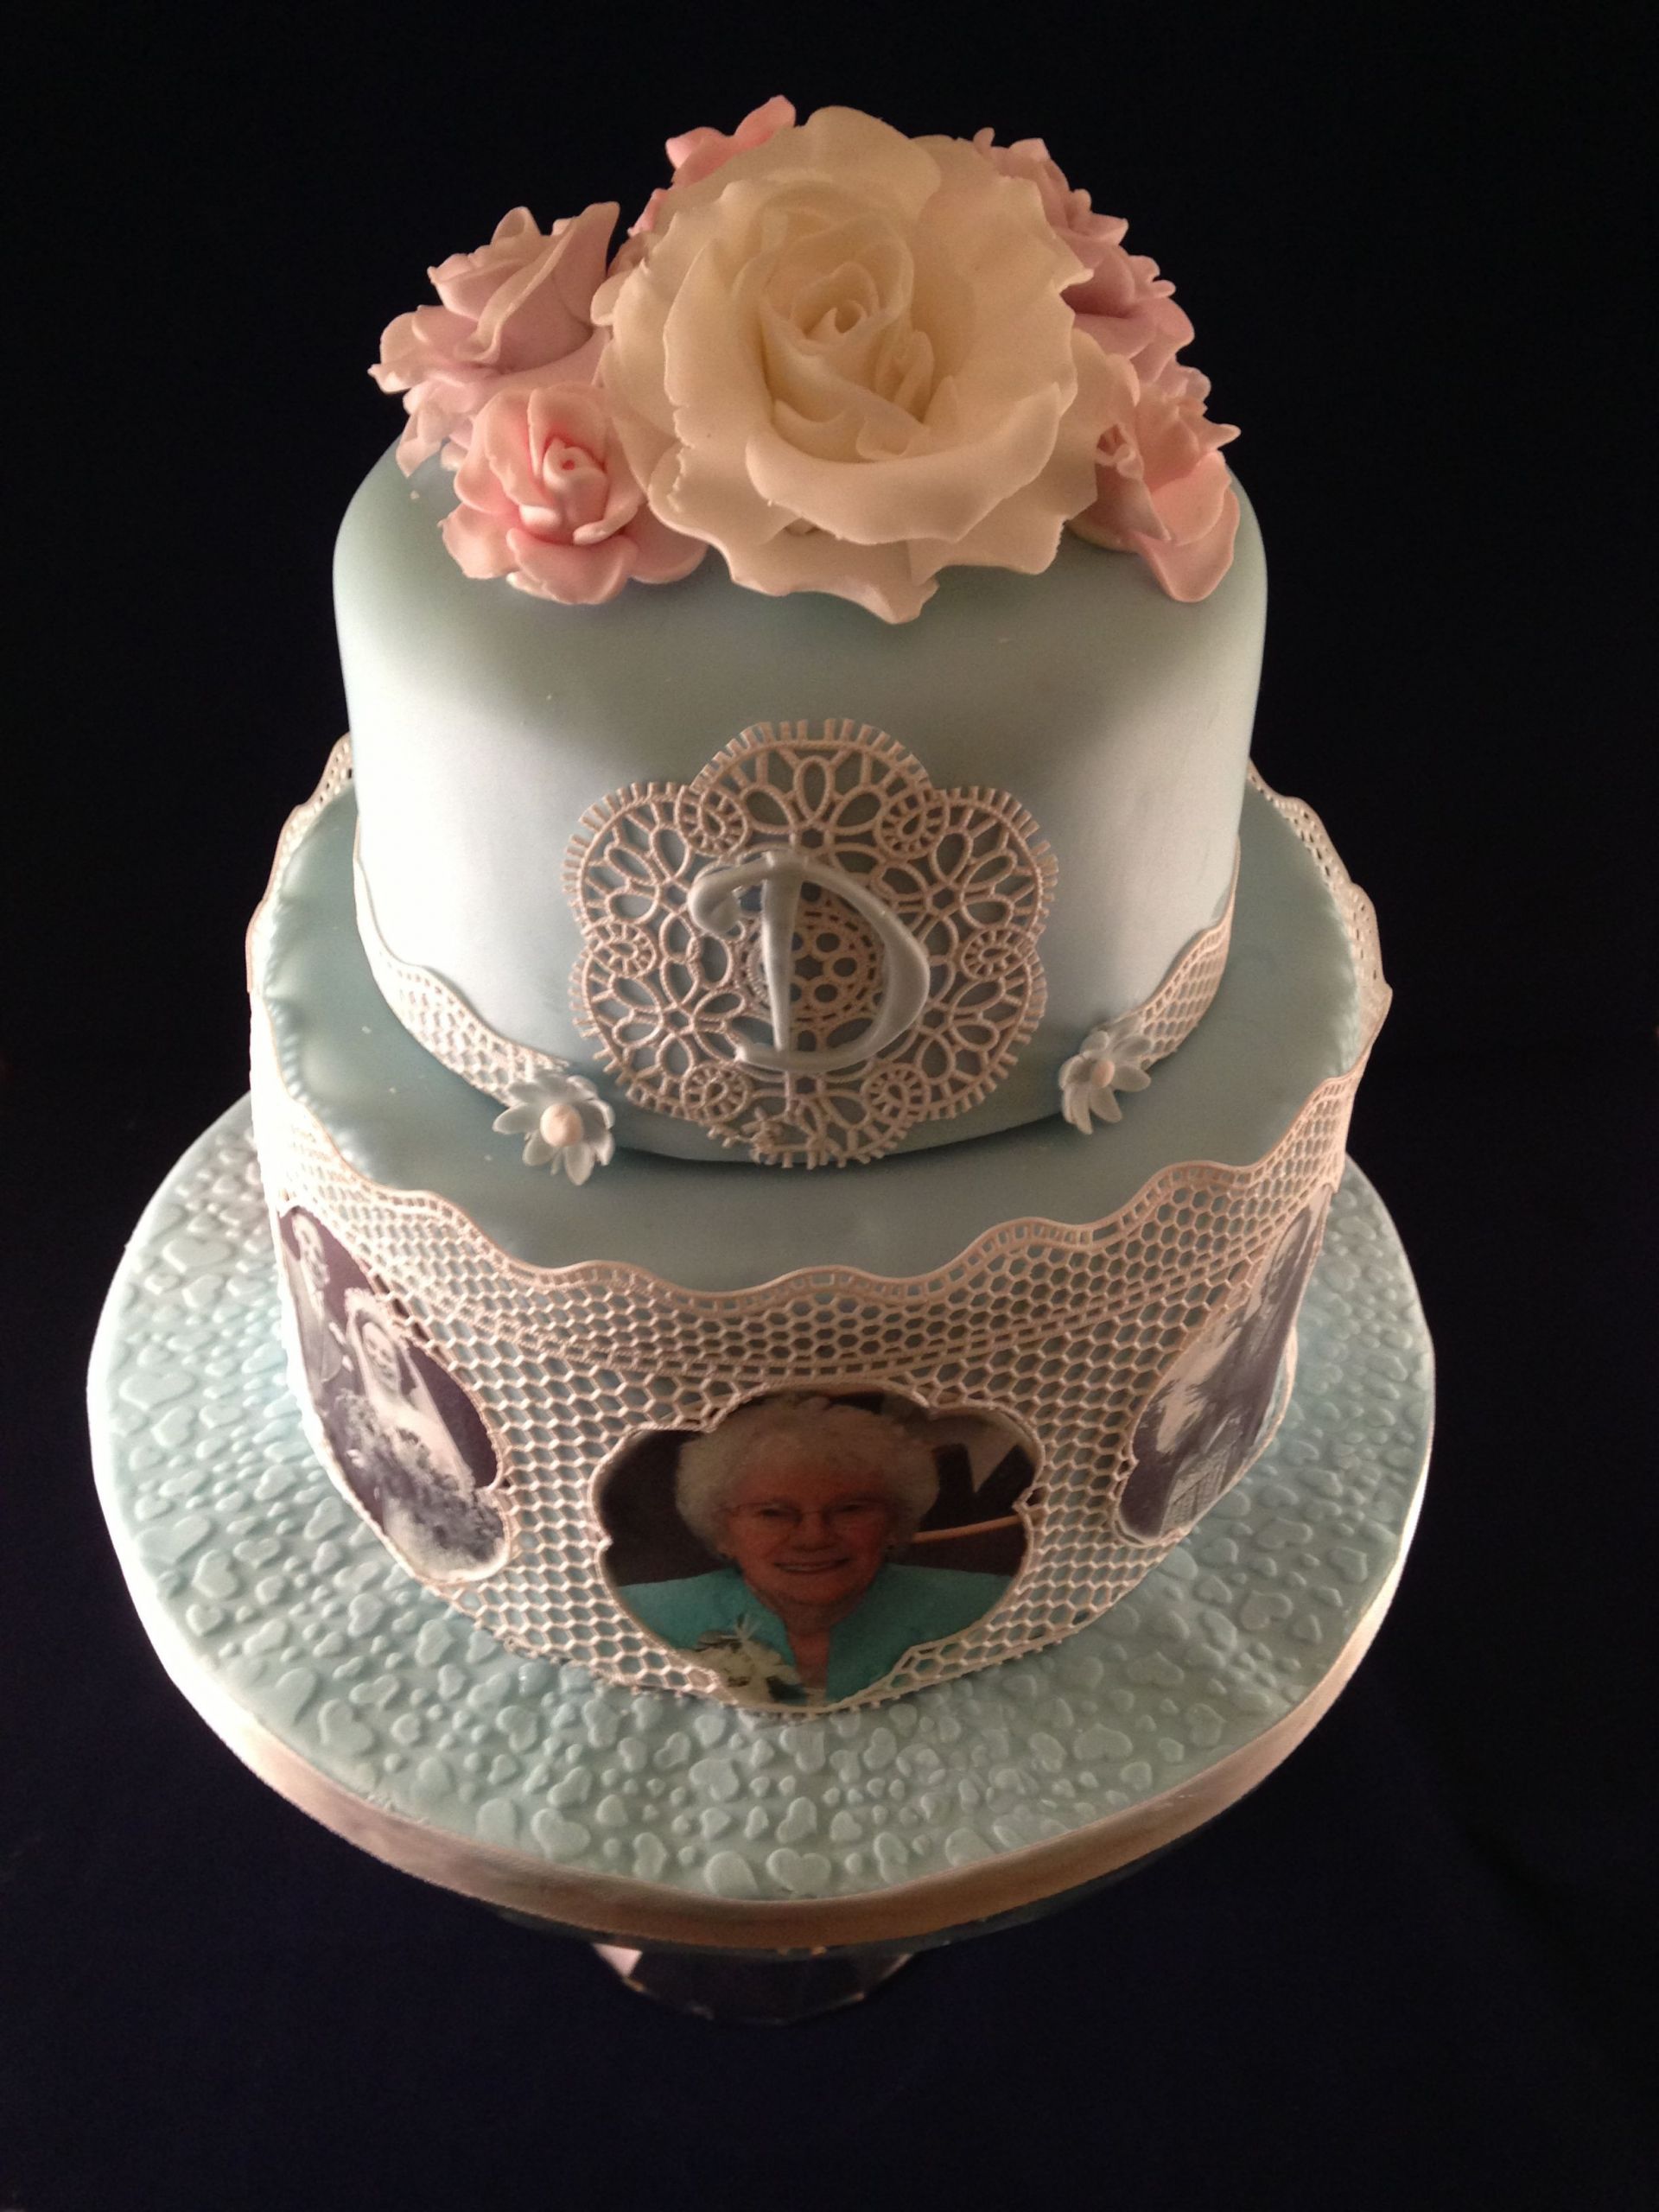 90th Birthday Cake New Female 90th Birthday Cake Ideas 90th Birthday Cakes and